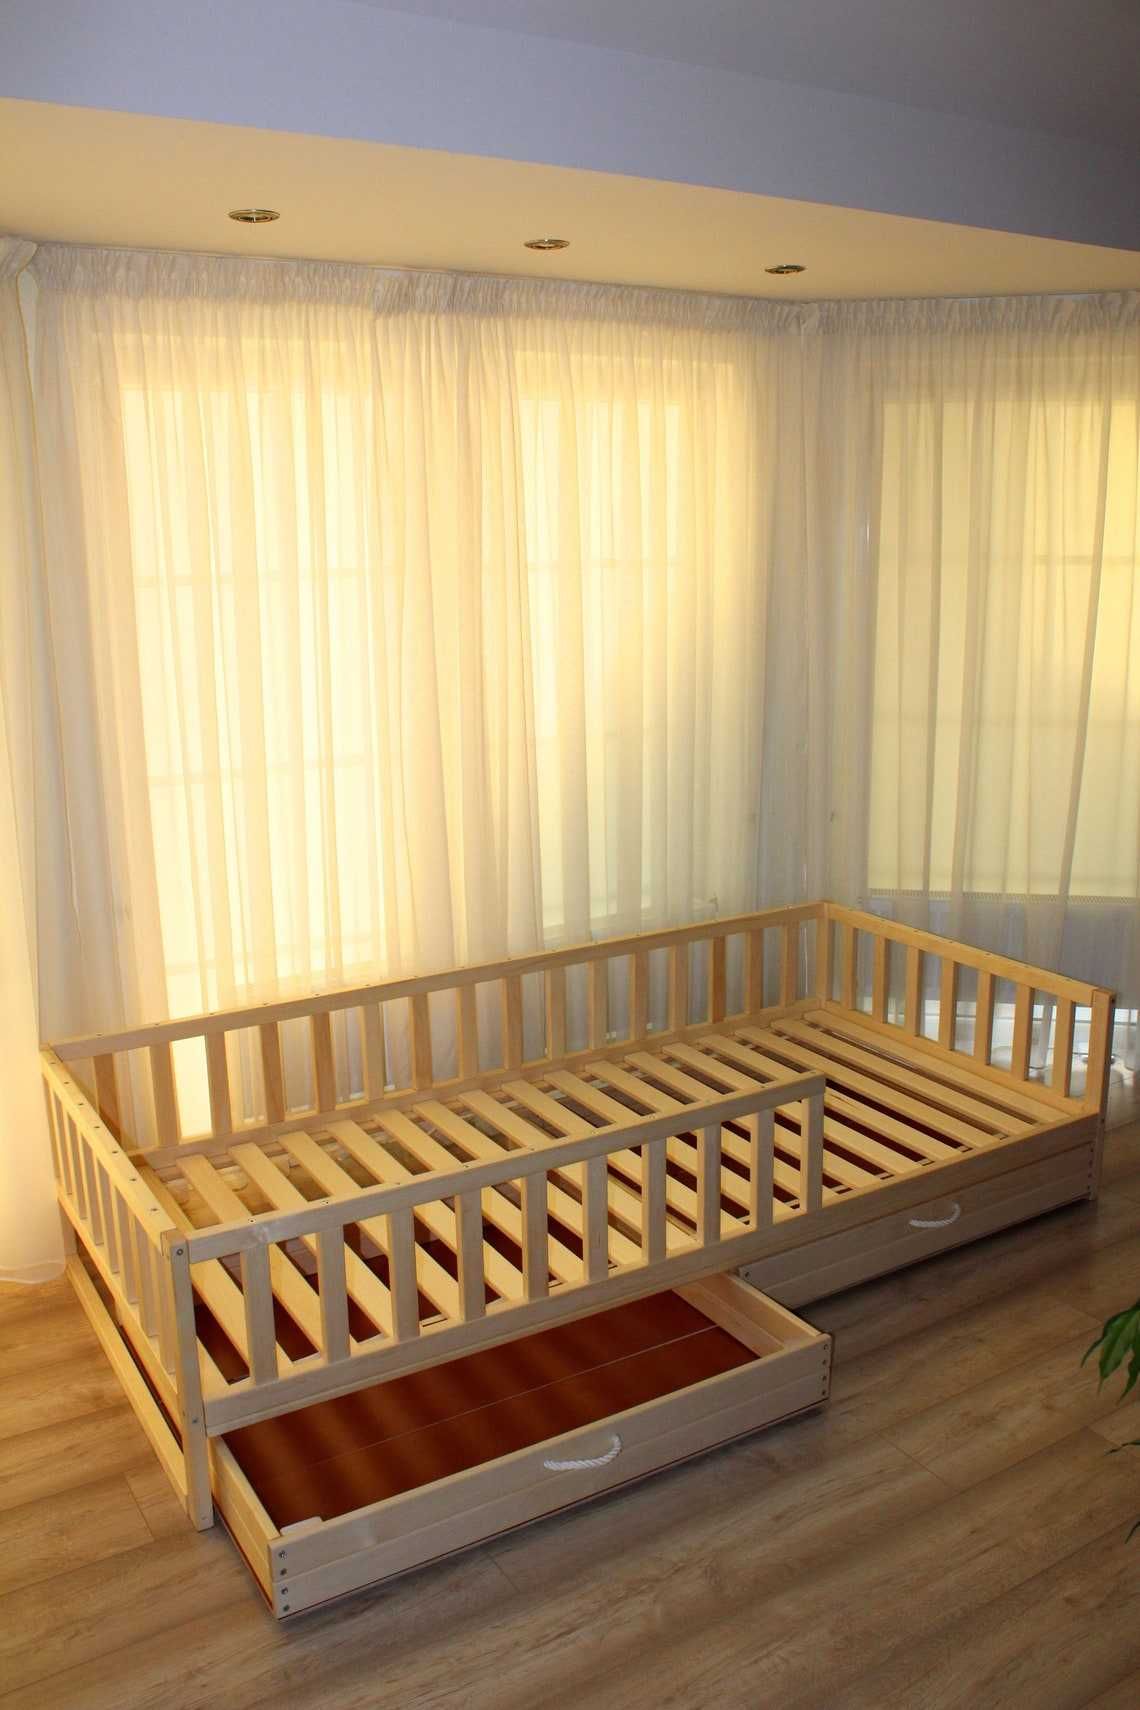 Детско легло Монтесори с решетки прегради МАСИВ